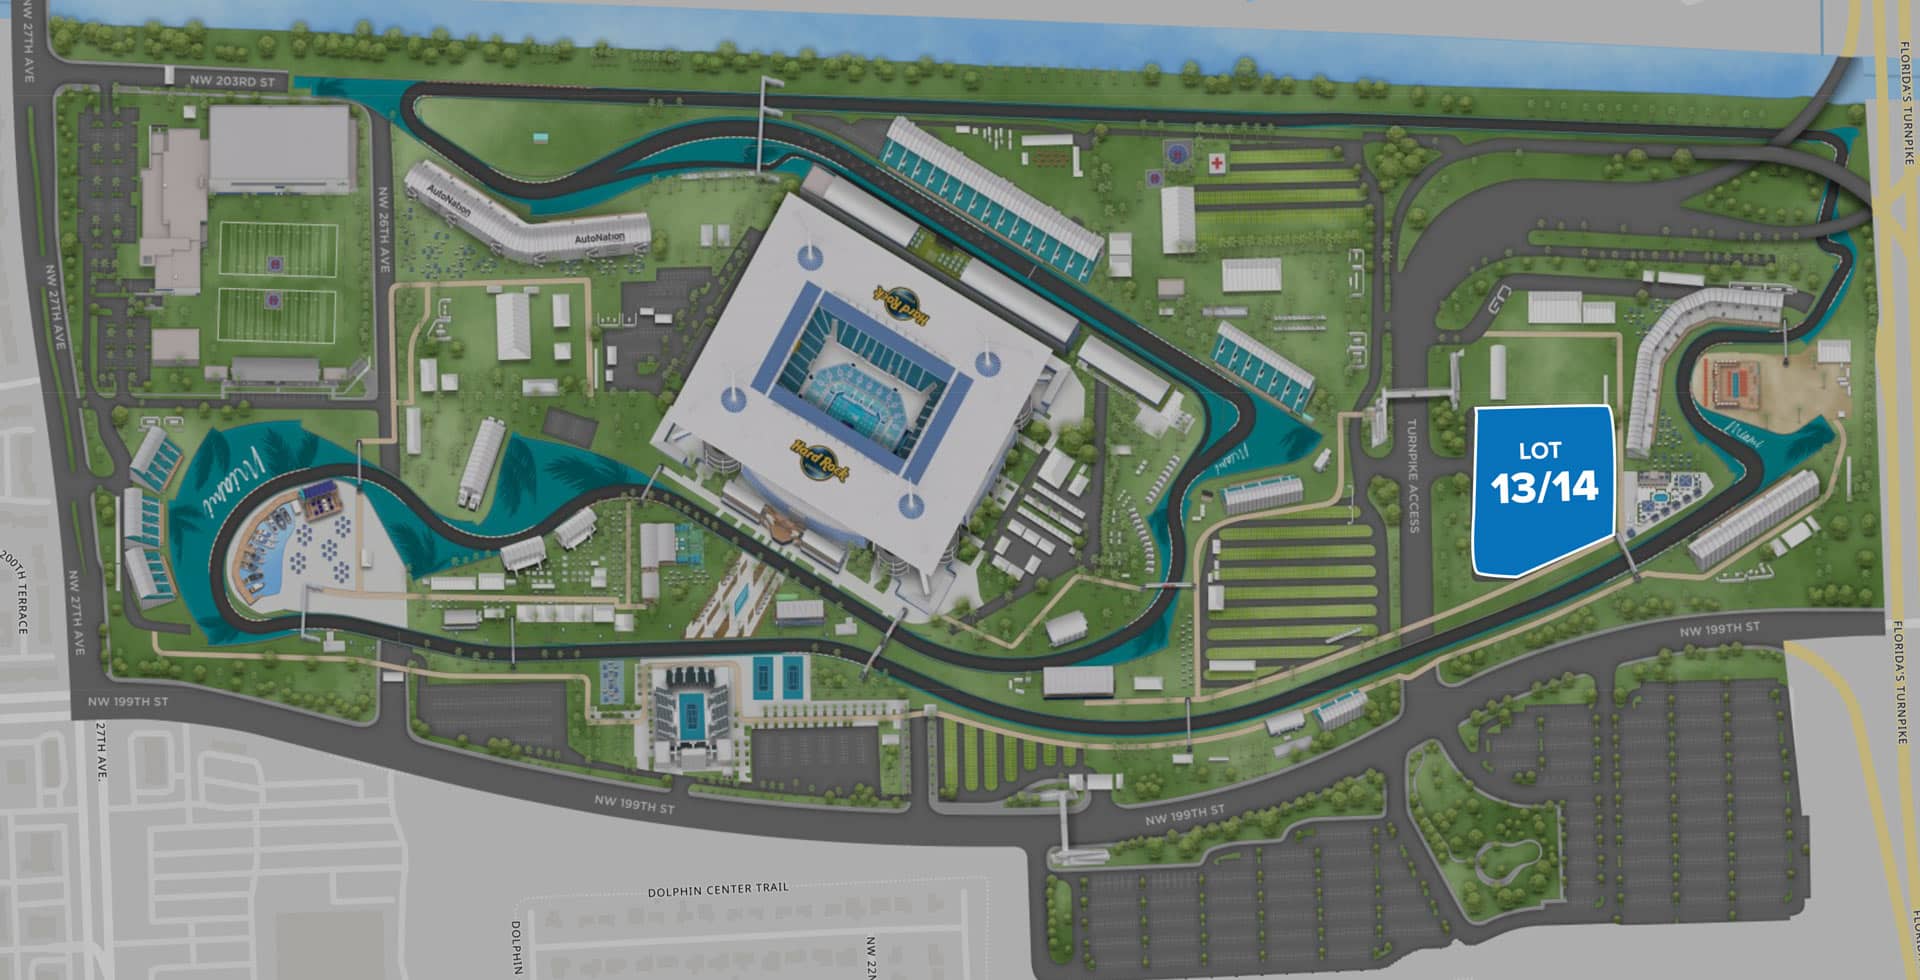 Parking Lot Location Map for Blue Lot 13/14 at the Formula 1 Crypto.com Miami Grand Prix